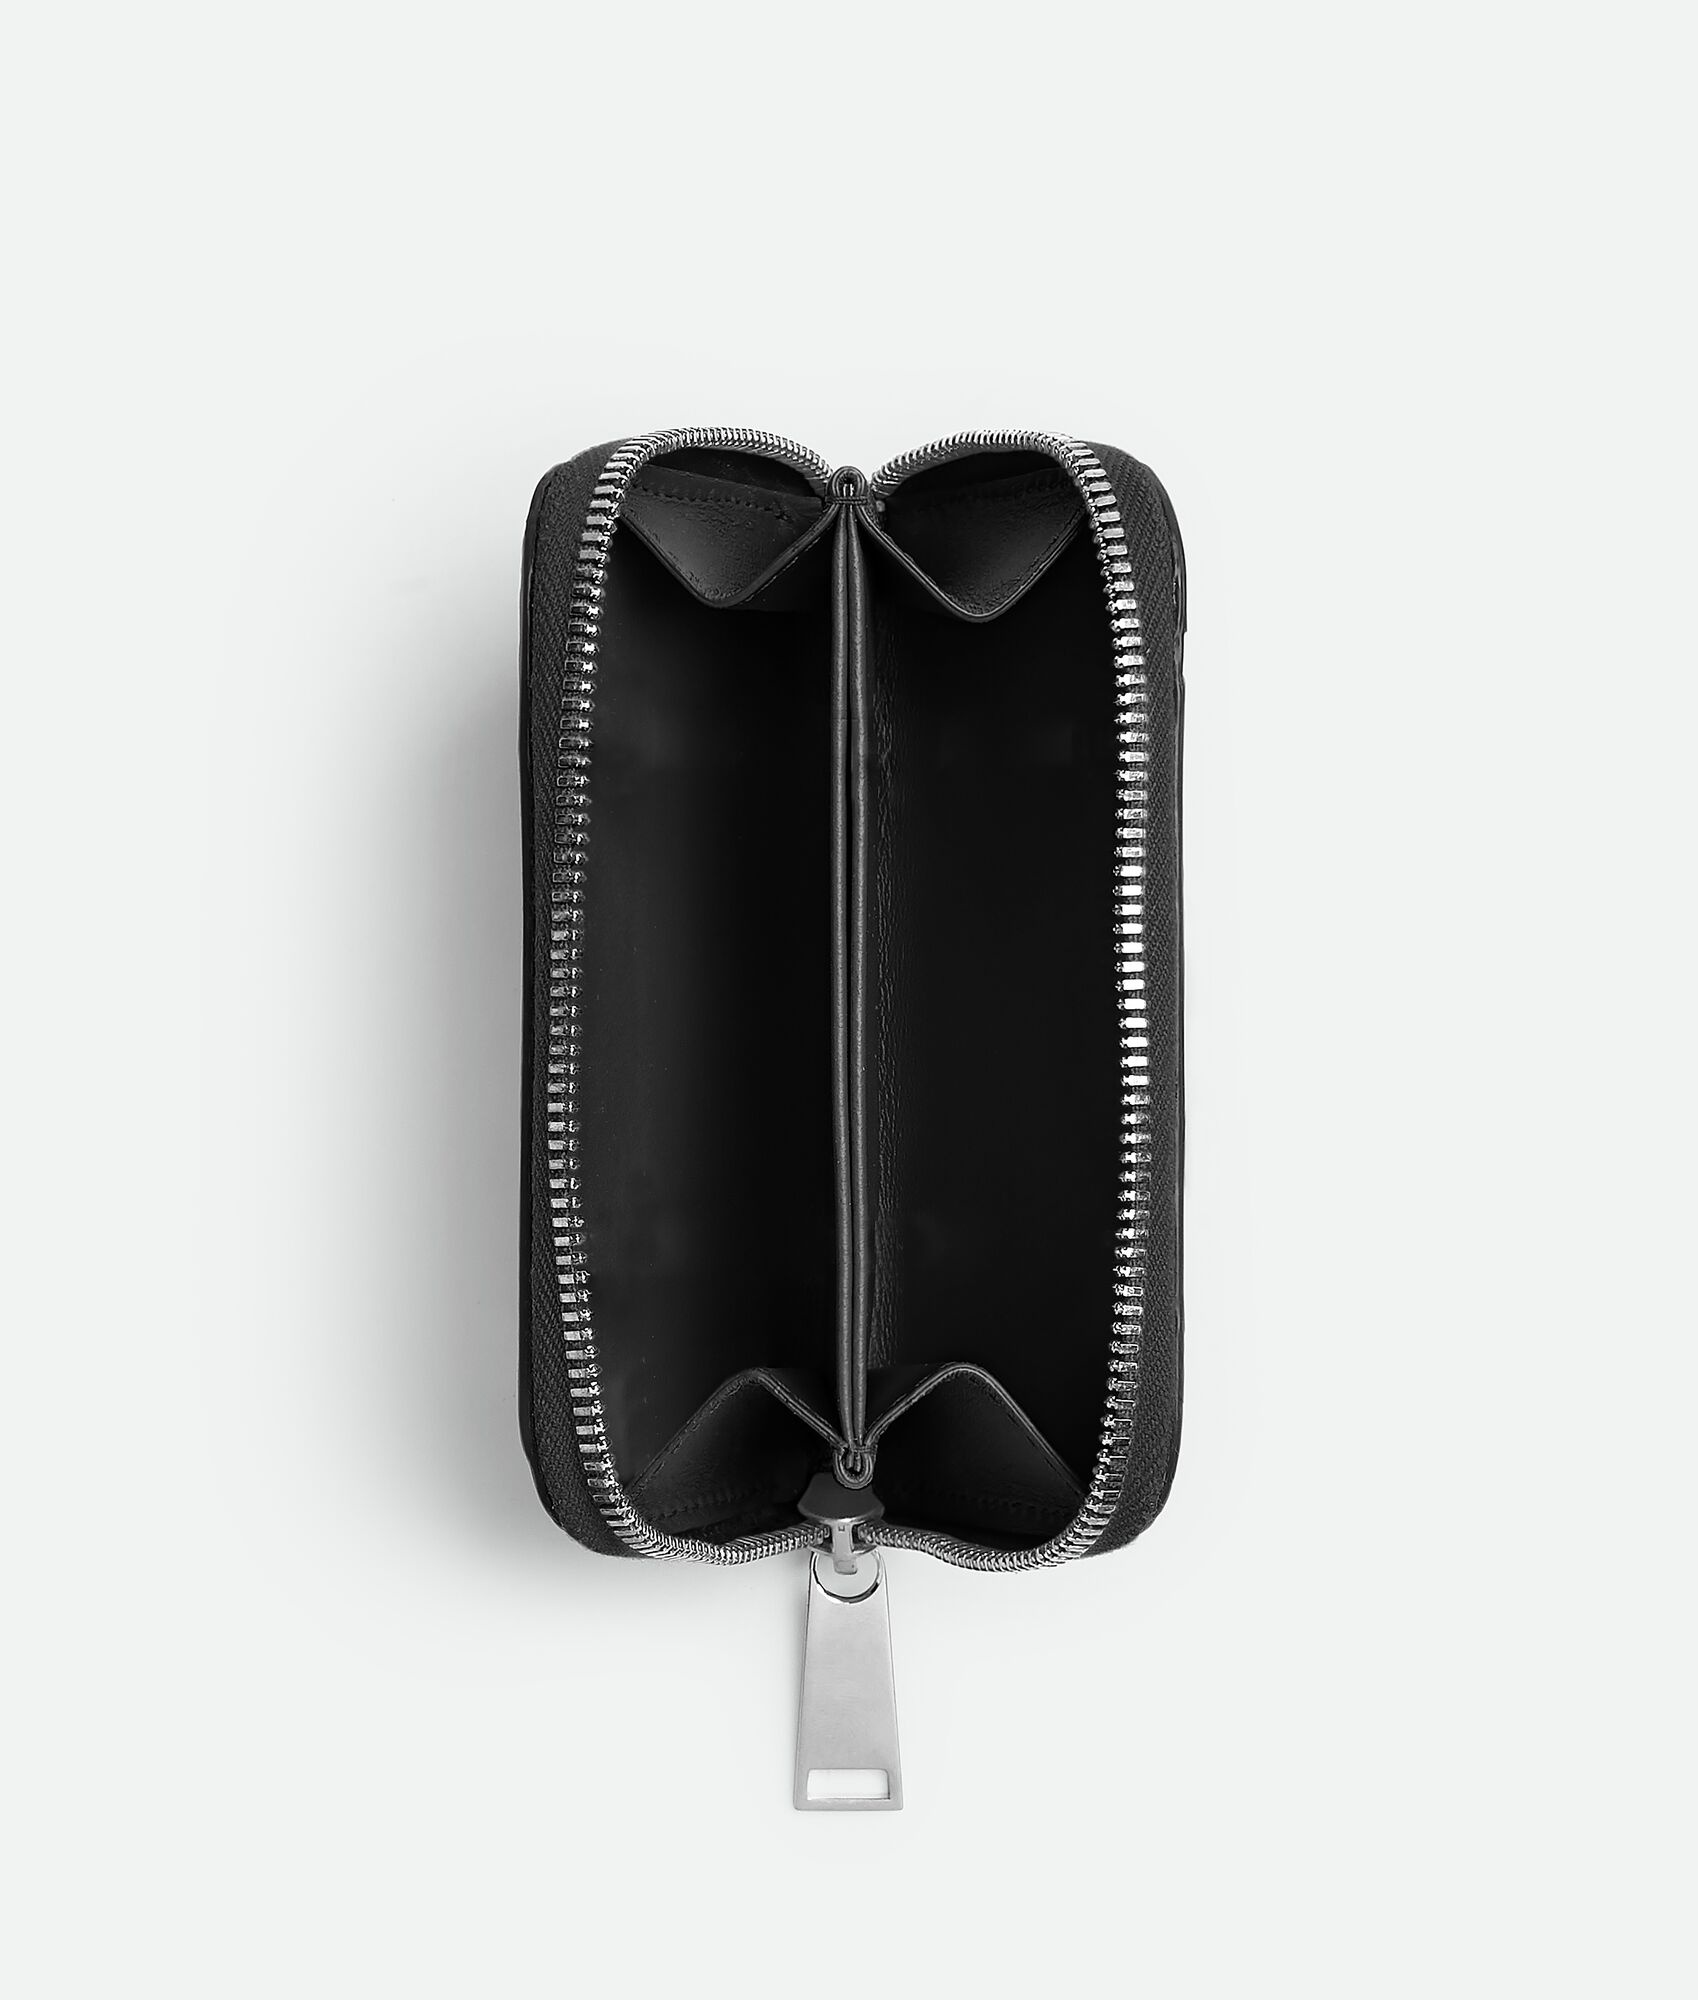 zipped coin purse - 2